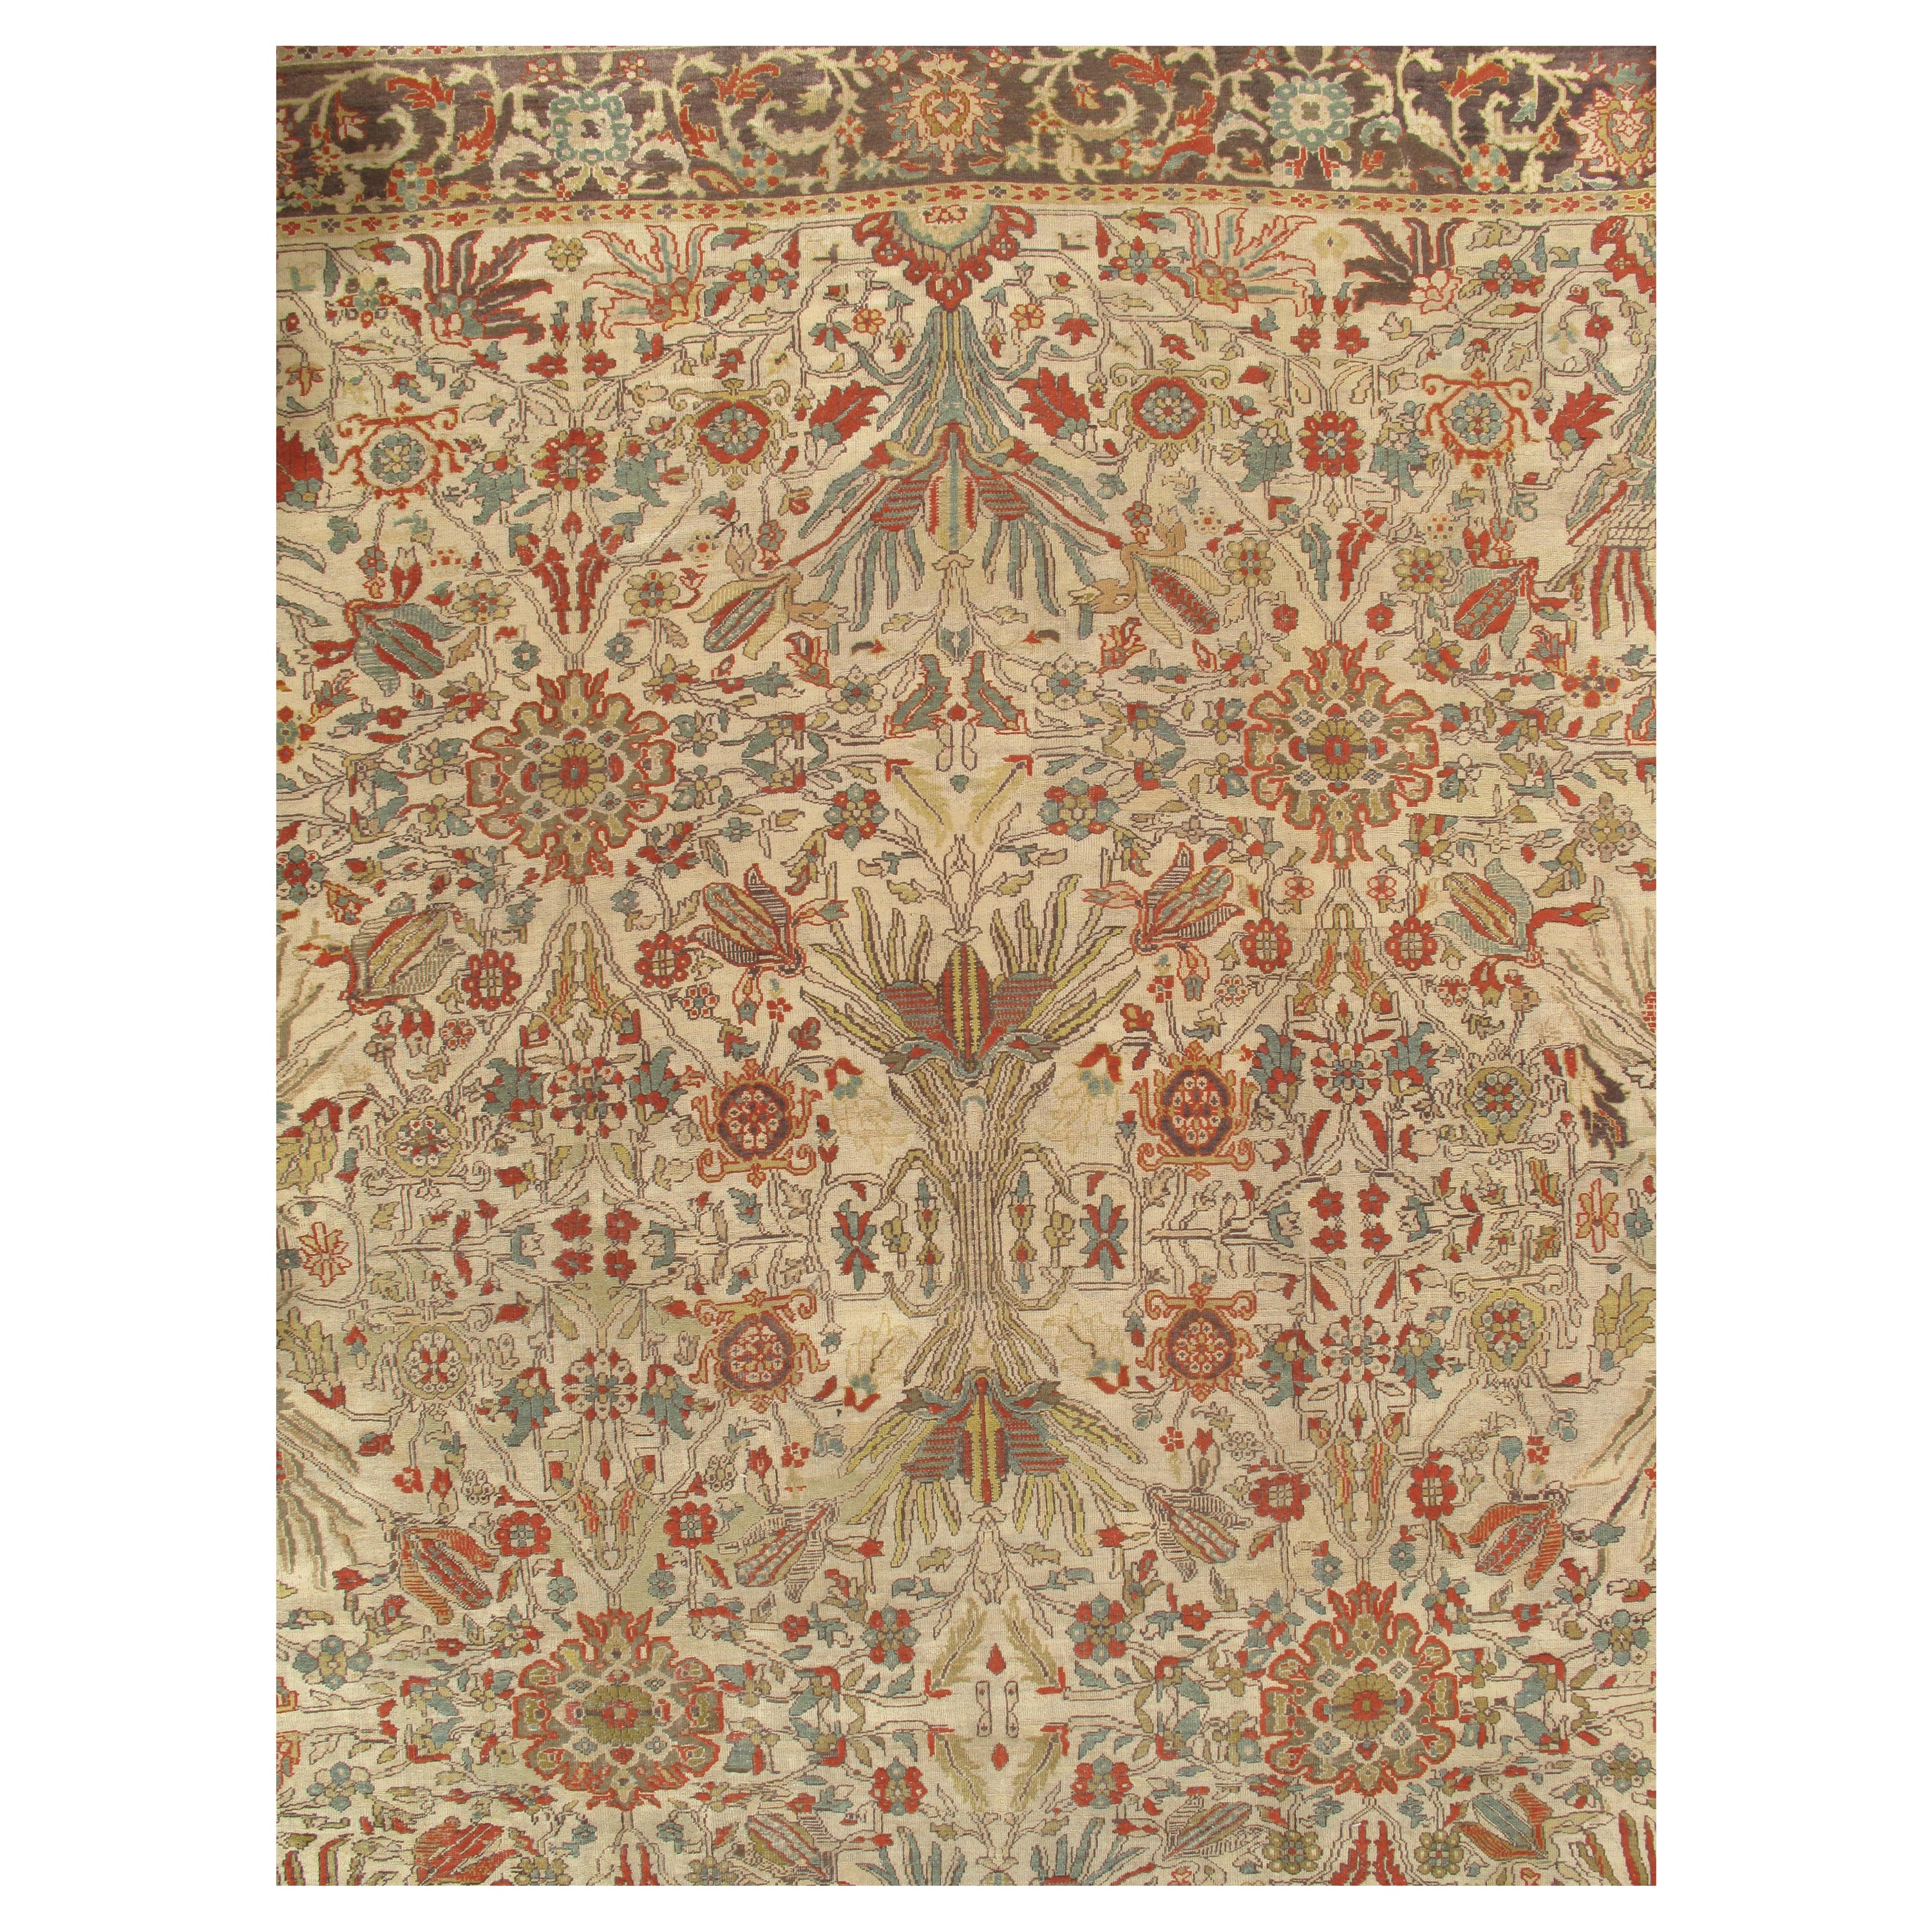 Antique Sultanabad Carpet, Handmade Persian Rug Gray, Light Blue, Green Soft Red